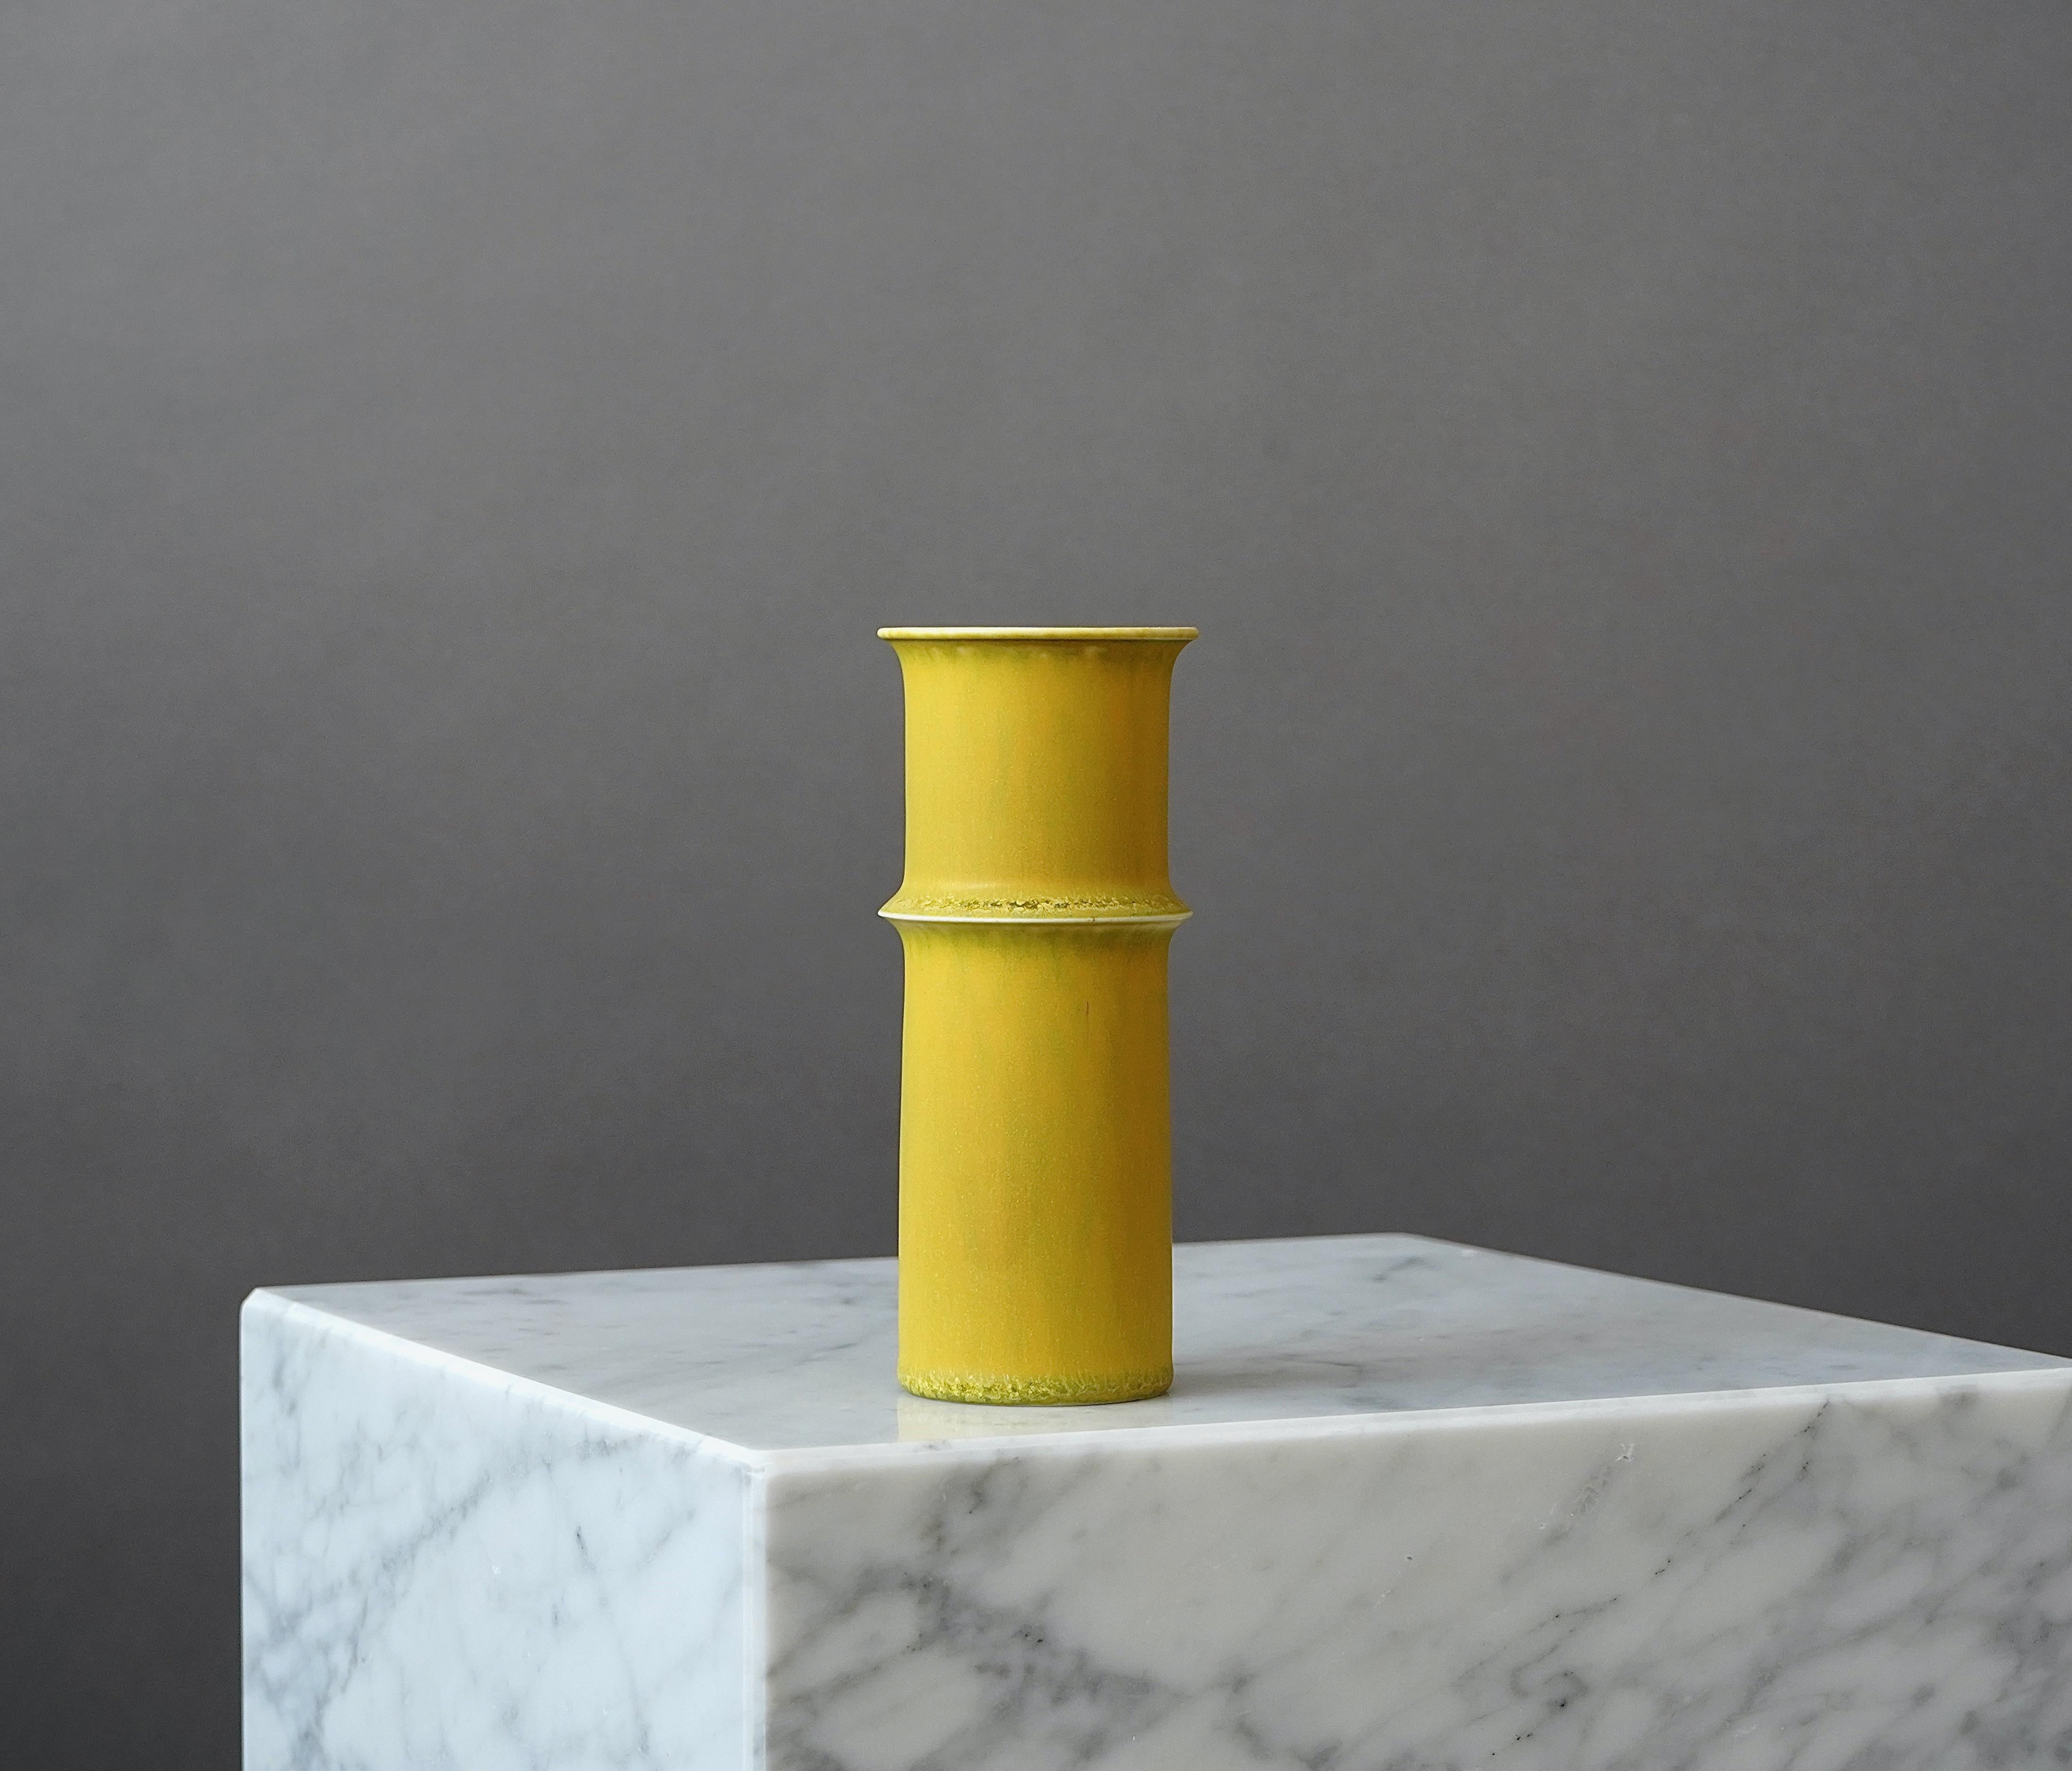 Swedish Stoneware Vase by Stig Lindberg for Gustavsberg Studio, Sweden, 1950s For Sale